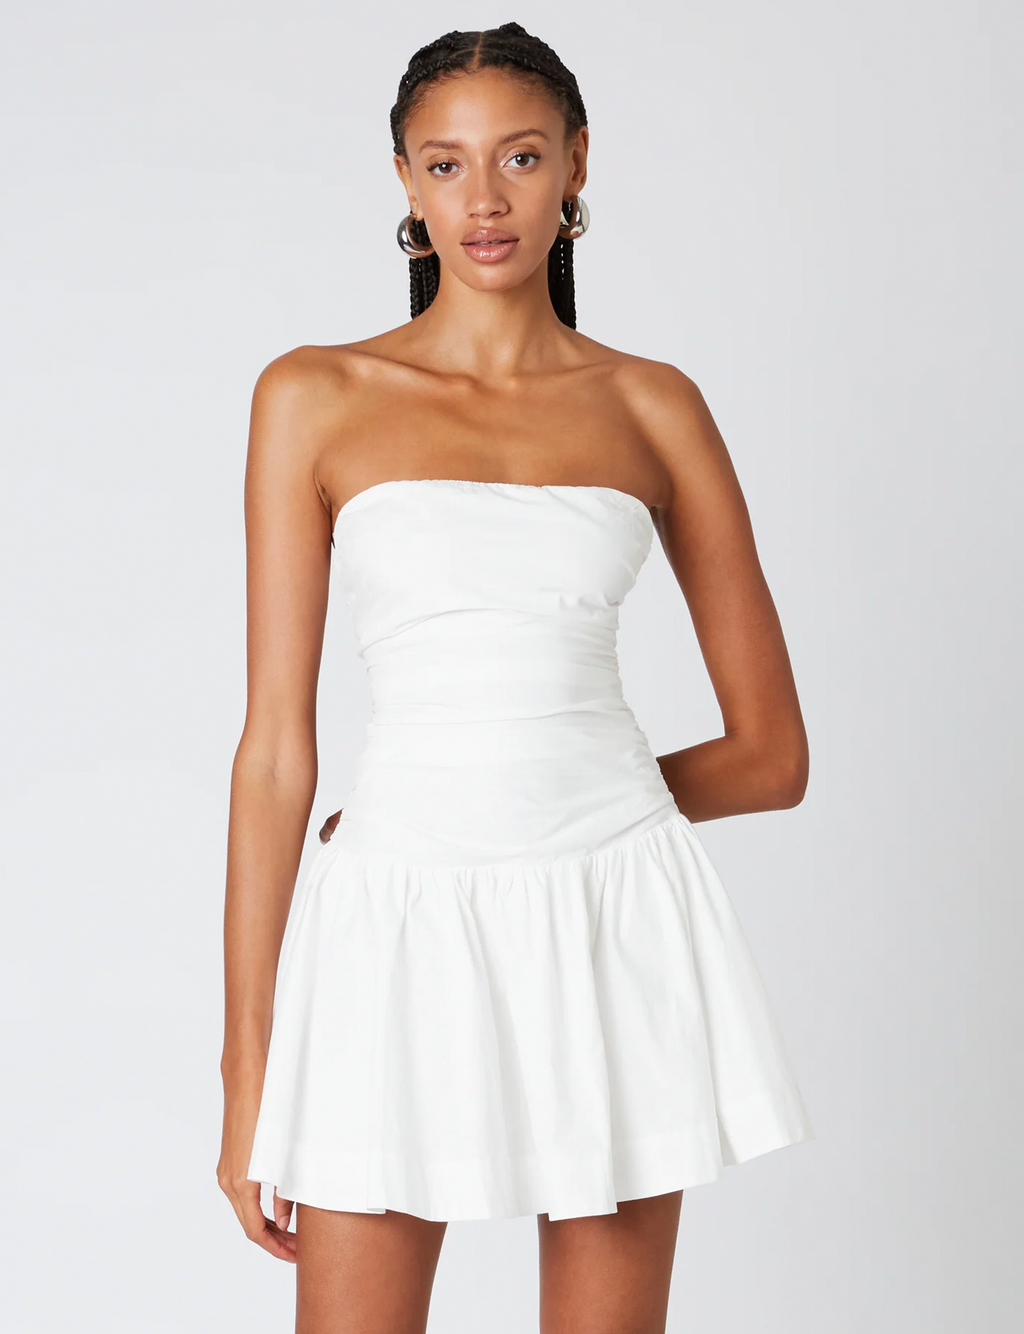 Currant Dress, White